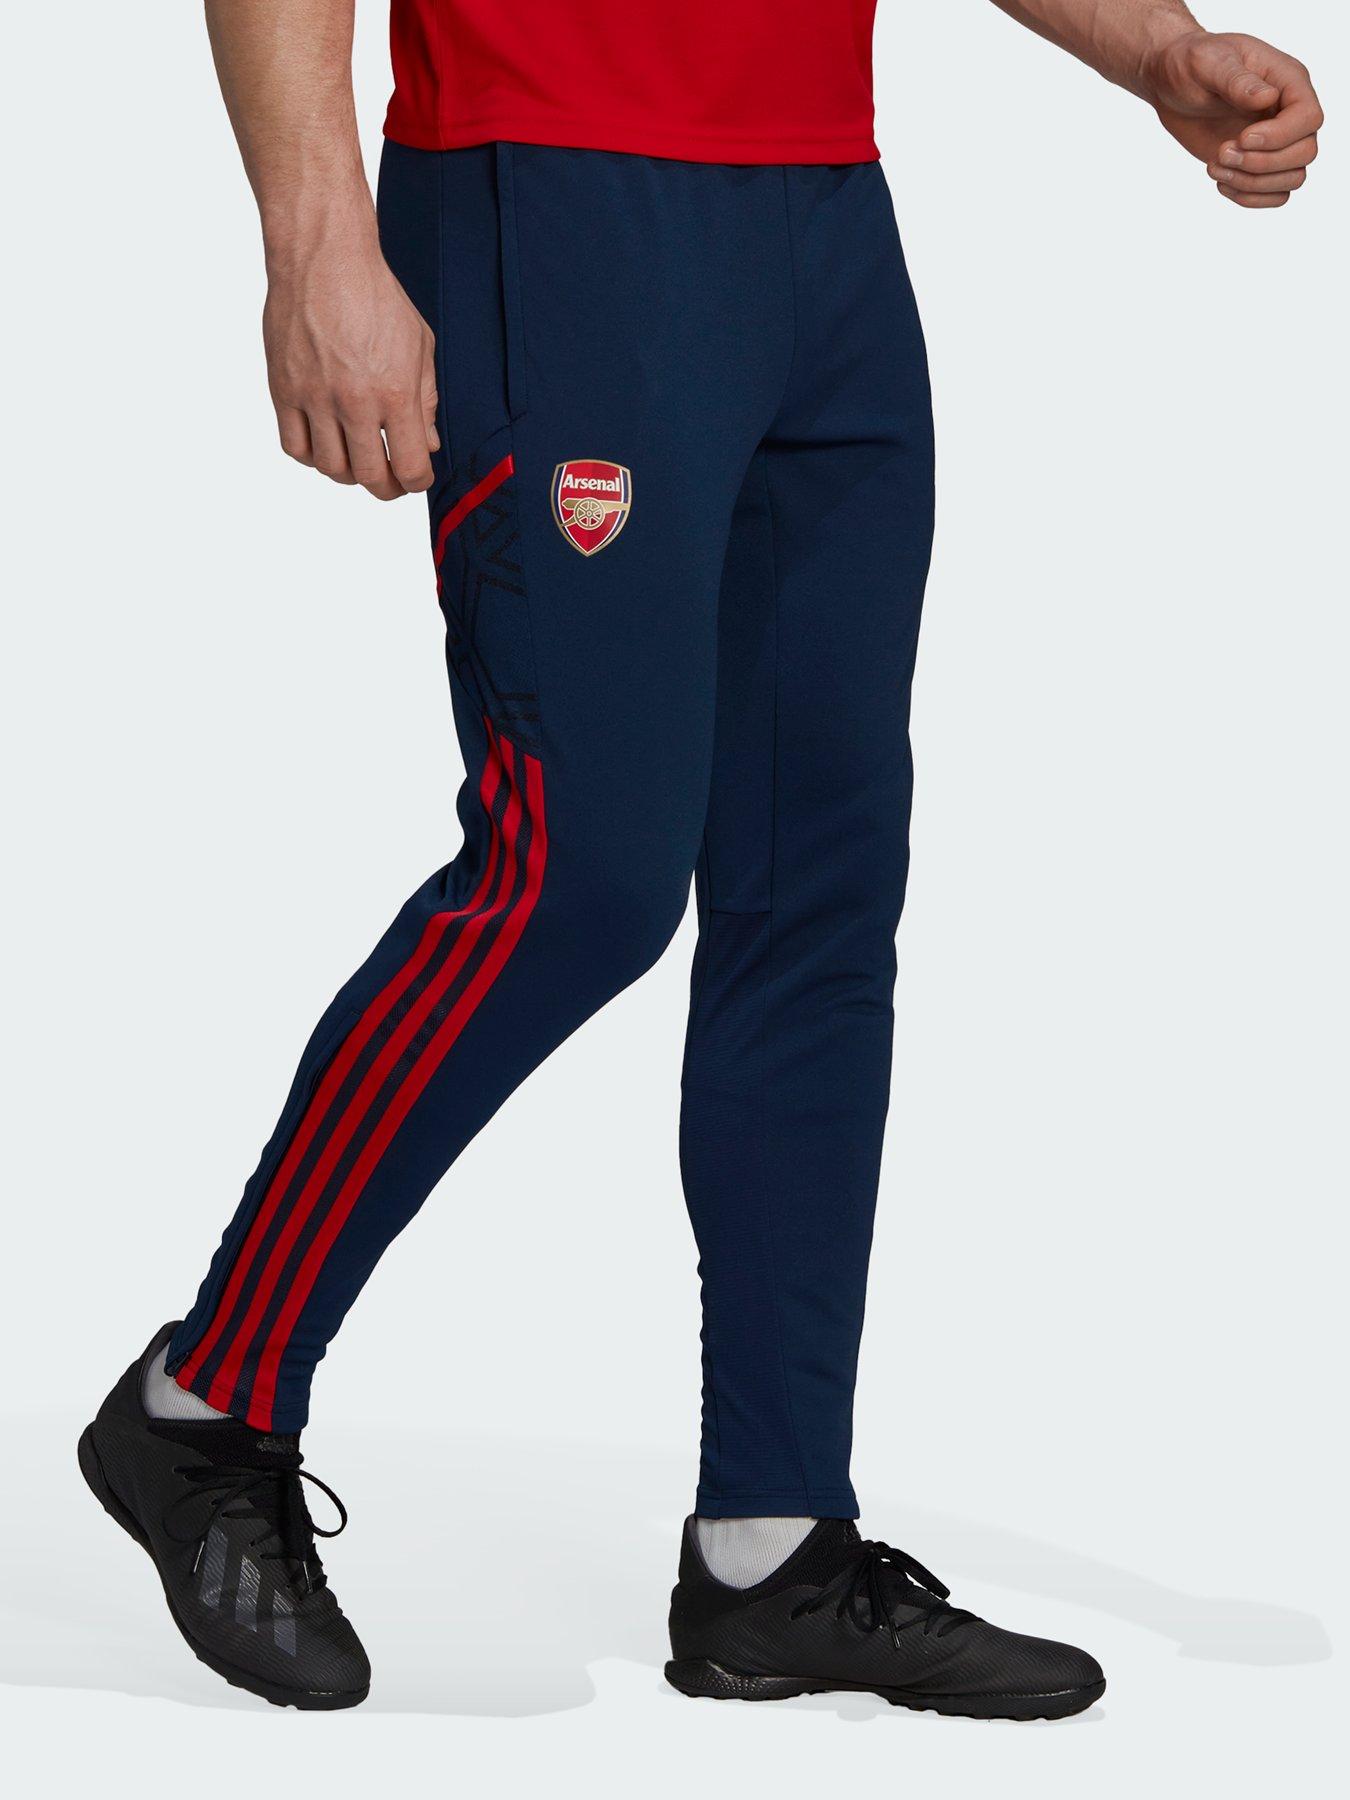 Arsenal Yoga Leggings